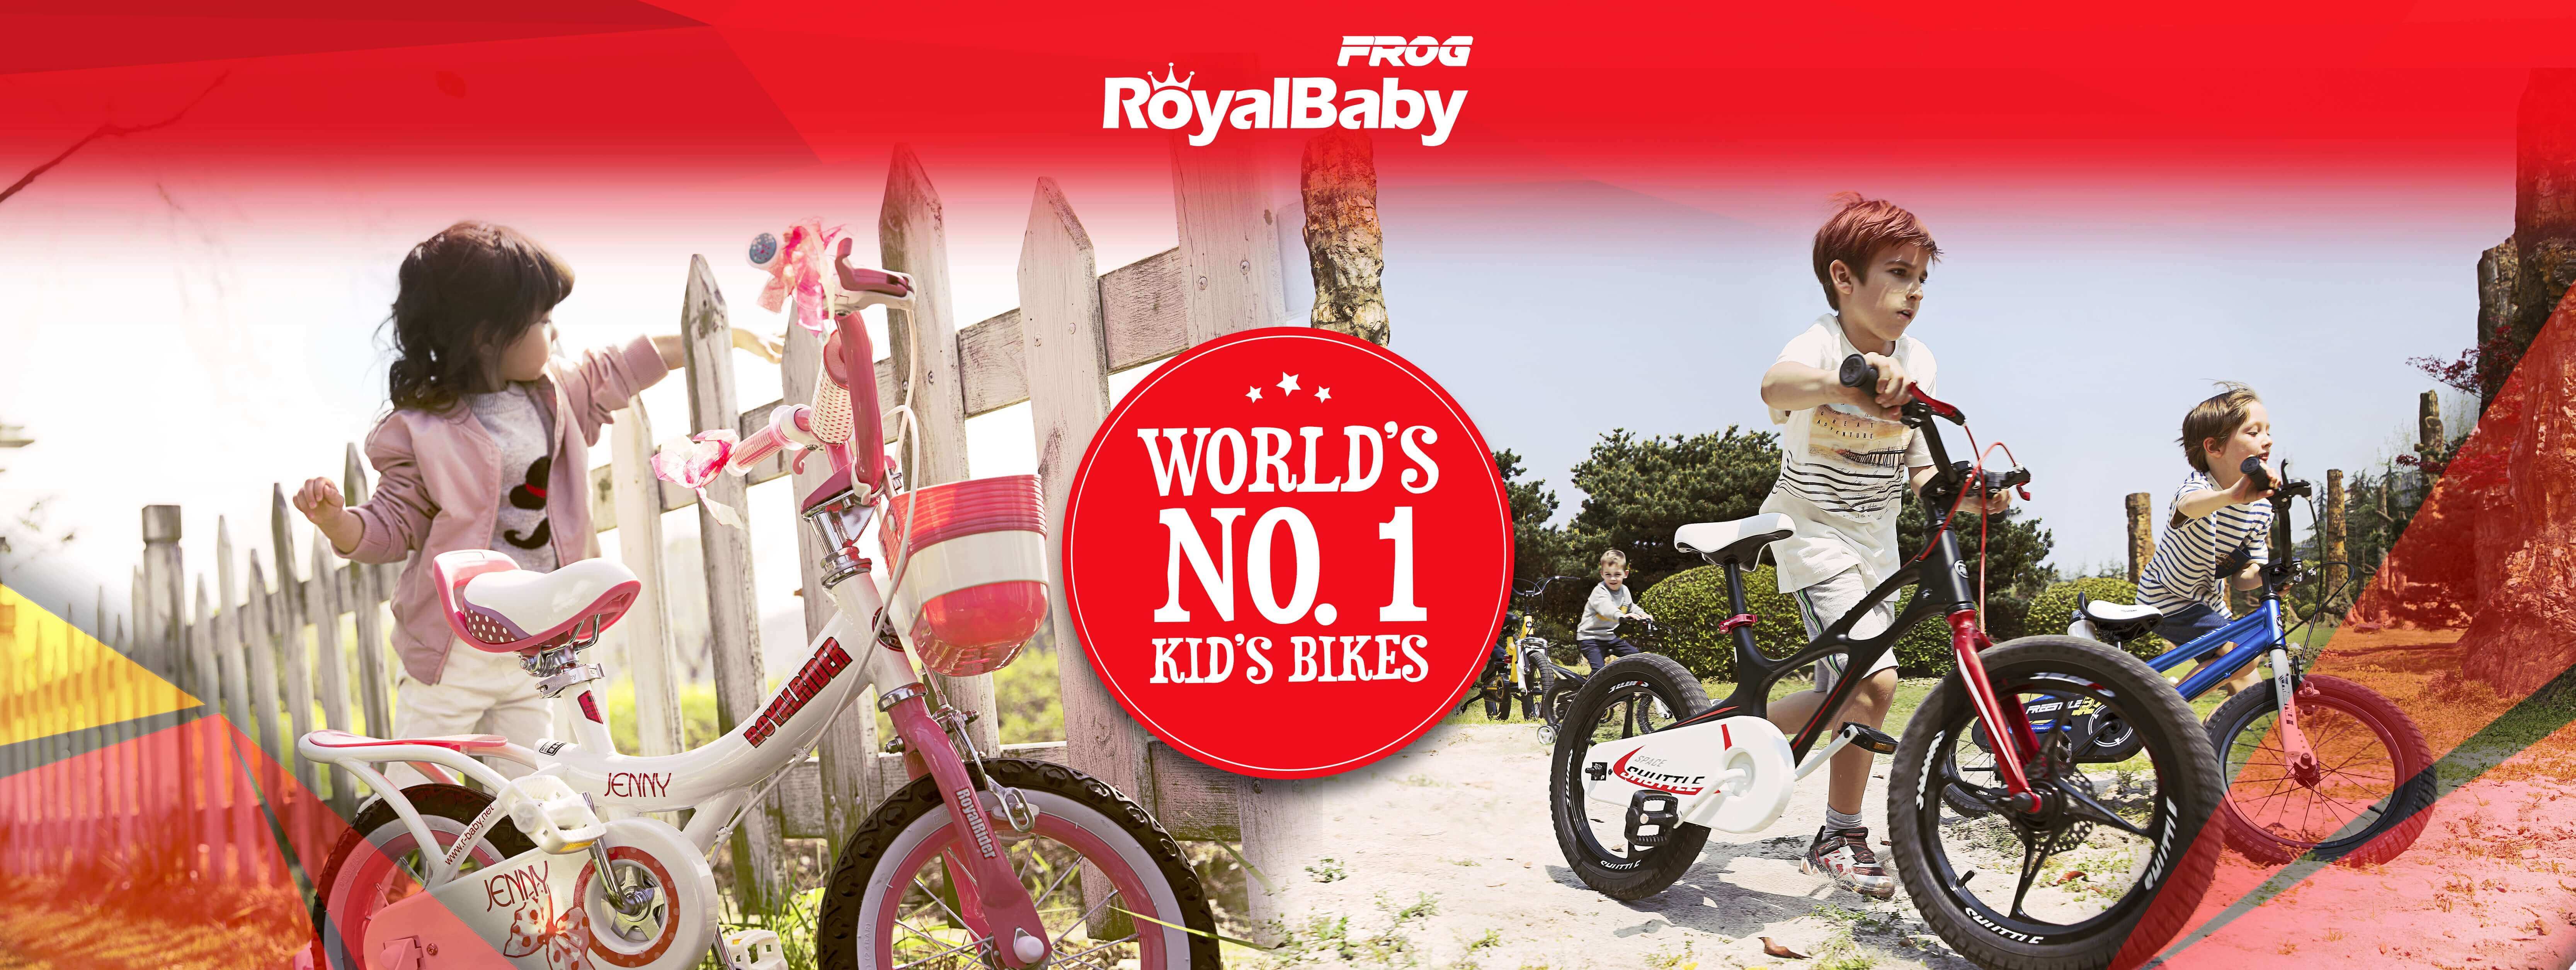 royal baby bikes website